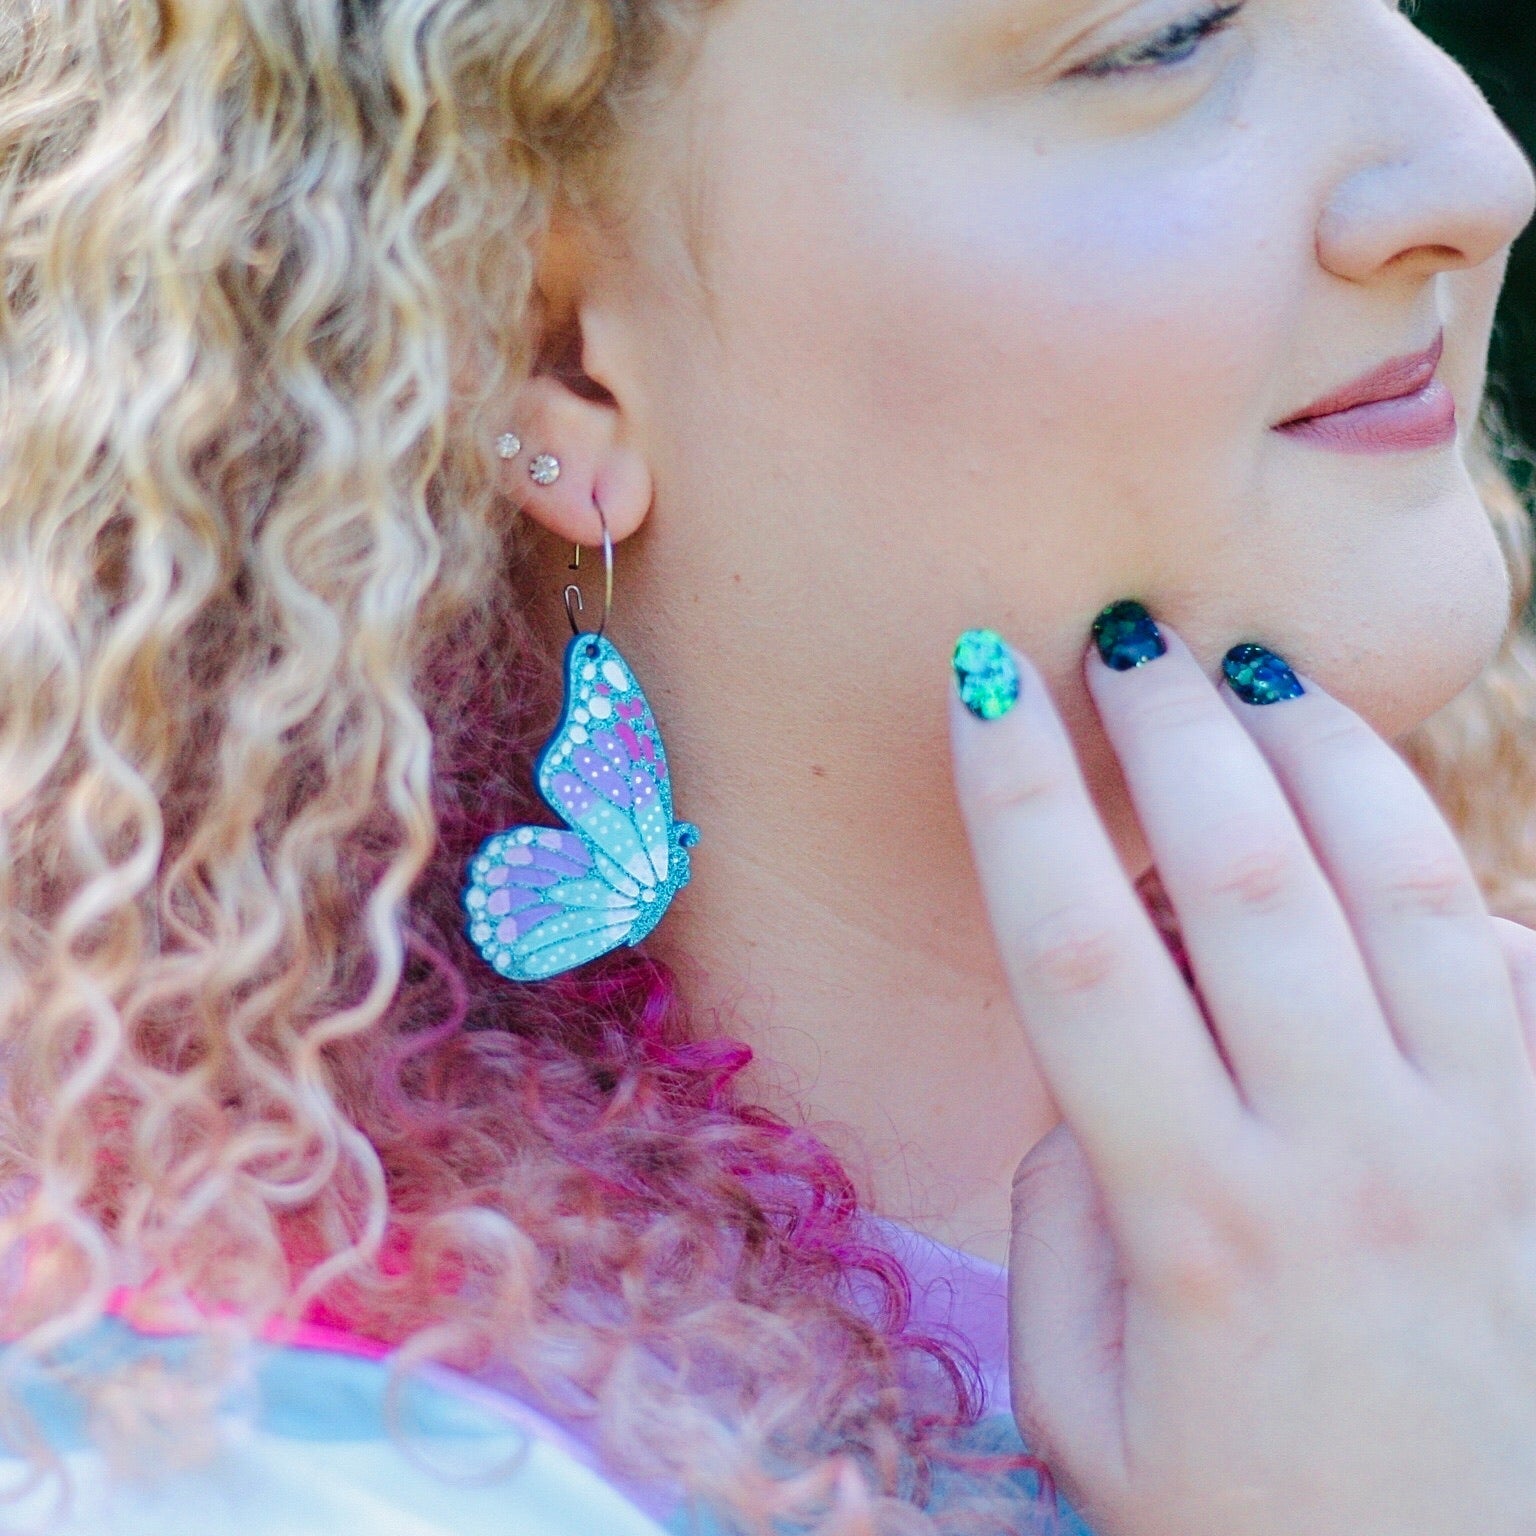 Large Butterfly Hoop Earrings - Silver Glitter Painted Acrylic Earrings - Lacey Lou Sparkles